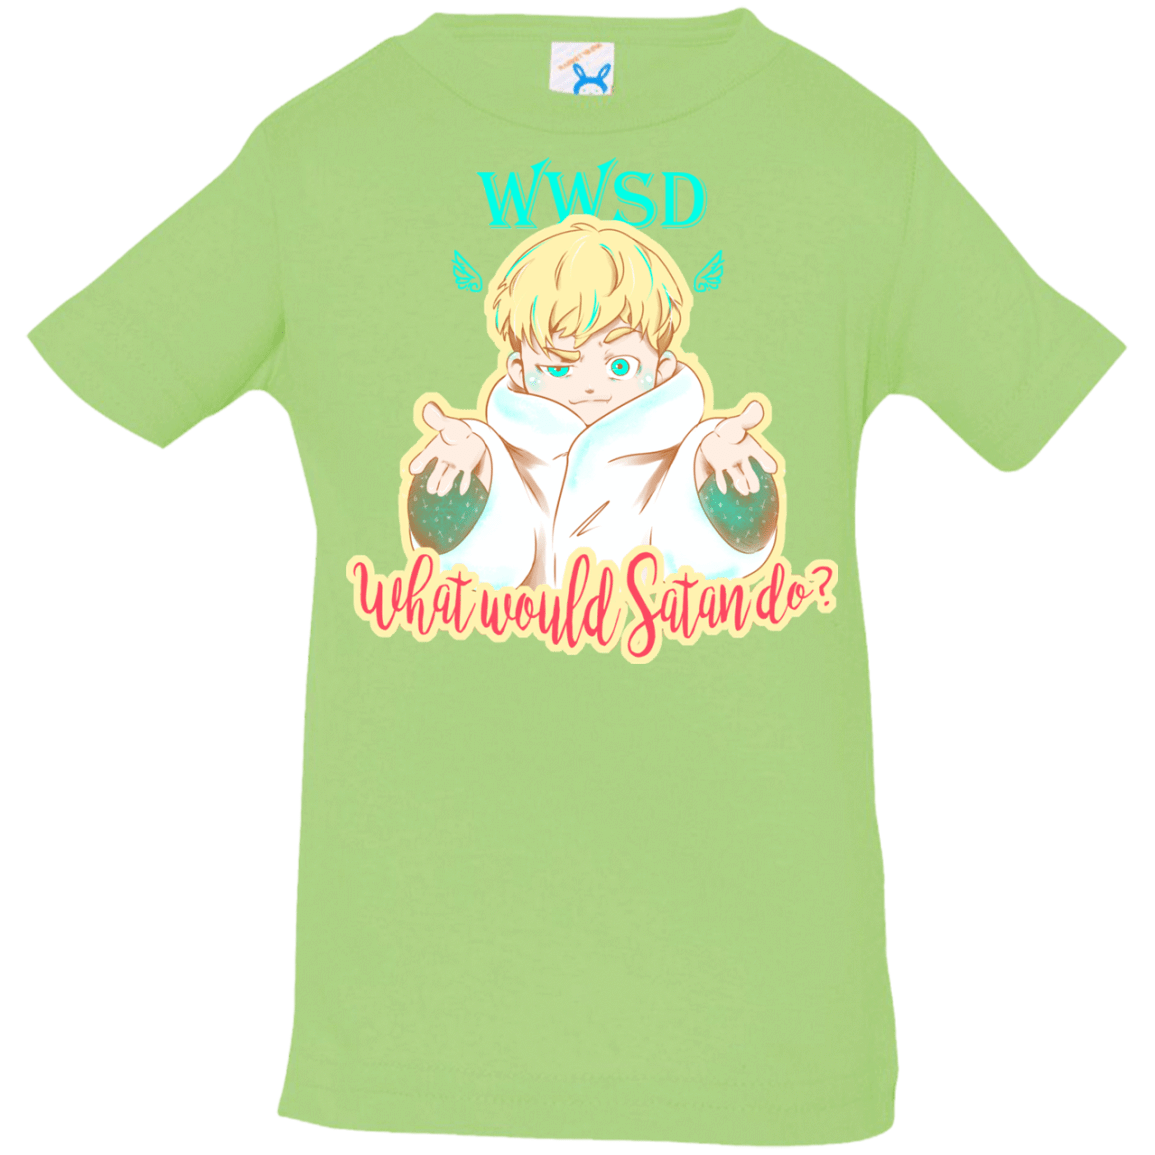 T-Shirts Key Lime / 6 Months Ryo Infant Premium T-Shirt